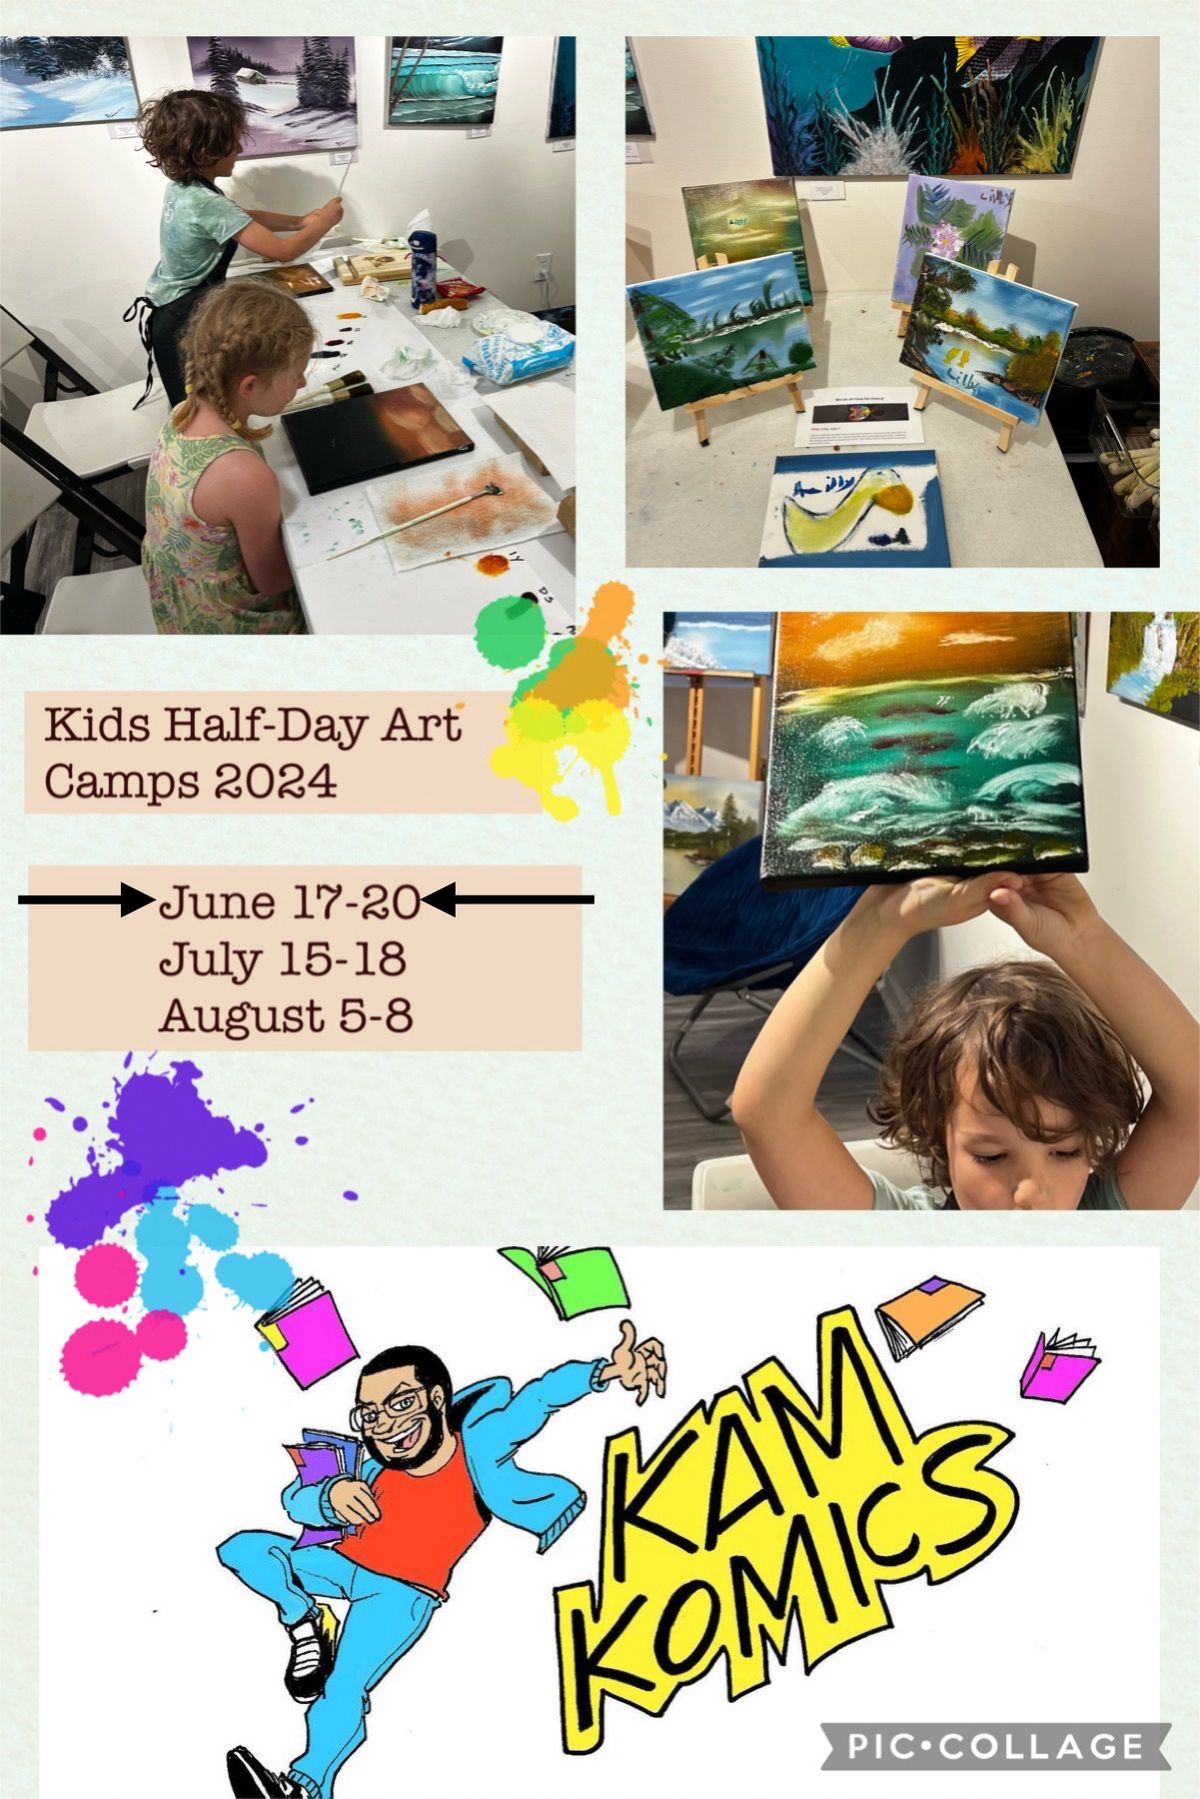 Kids Half Day Art Camp: June 17-20